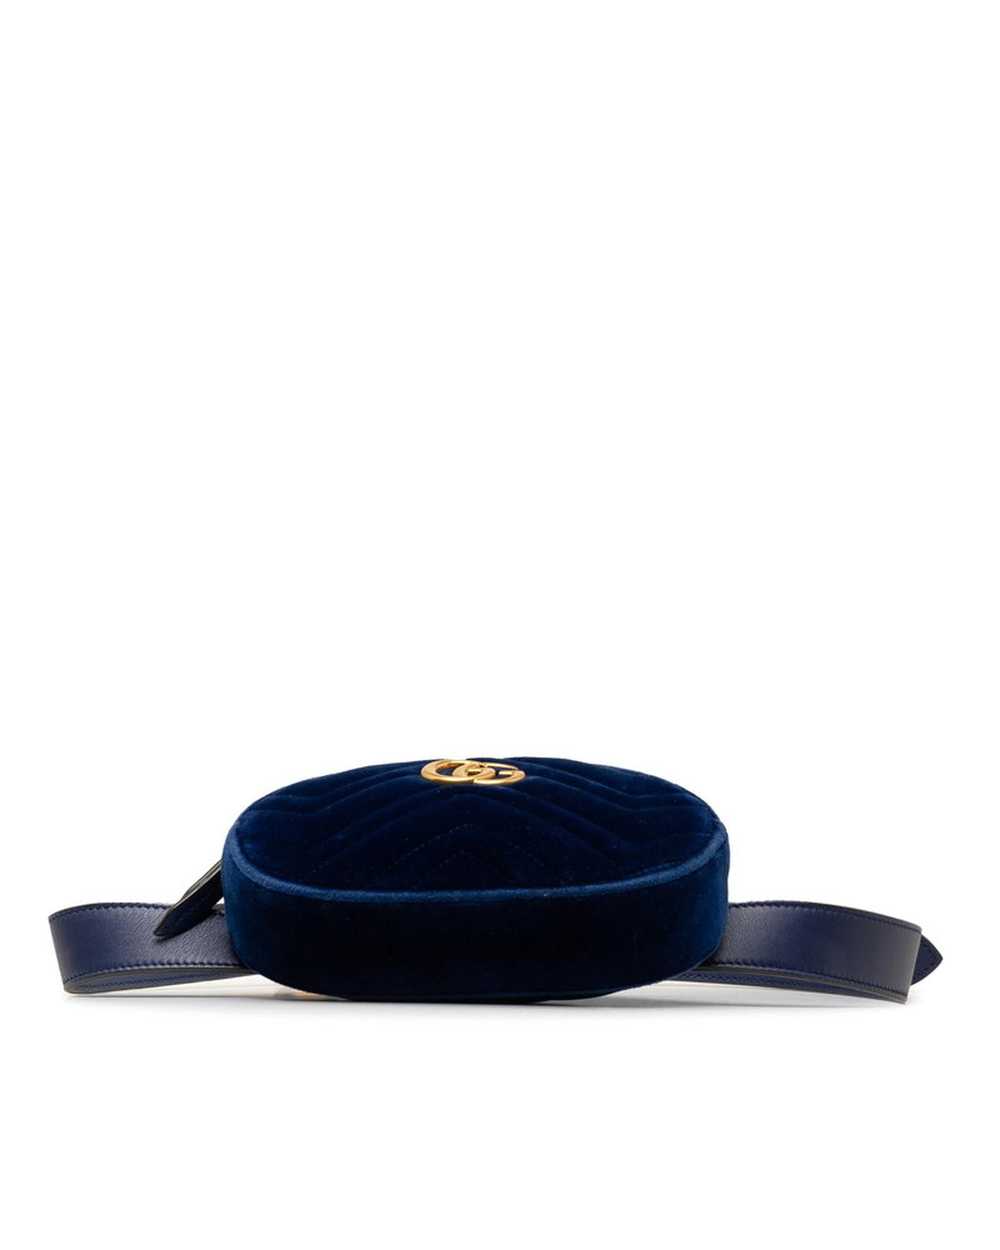 Gucci Blue Velour Belt Bag - GG Marmont - image 4